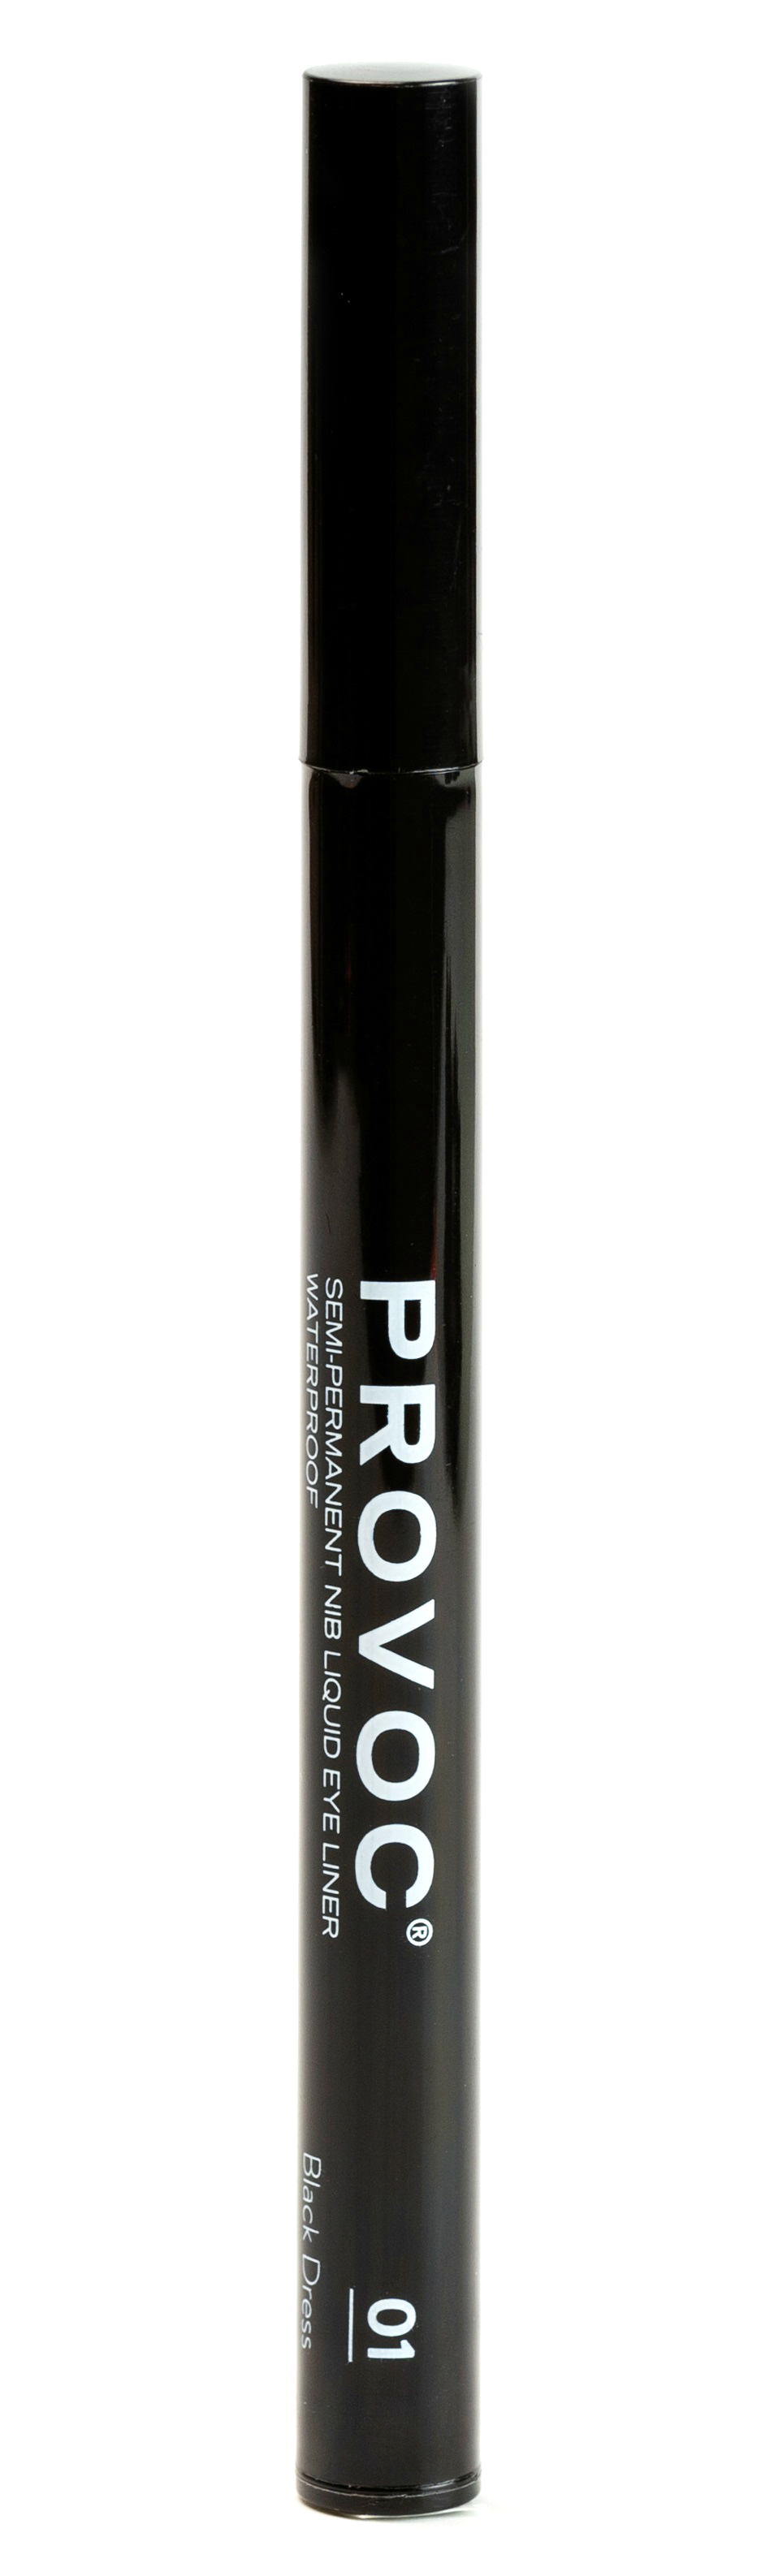 PROVOC Подводка-фломастер для глаз, 01 черный / Nib Liquid Eye Liner 01 Little Black Dress 1 мл PV0001 - фото 1